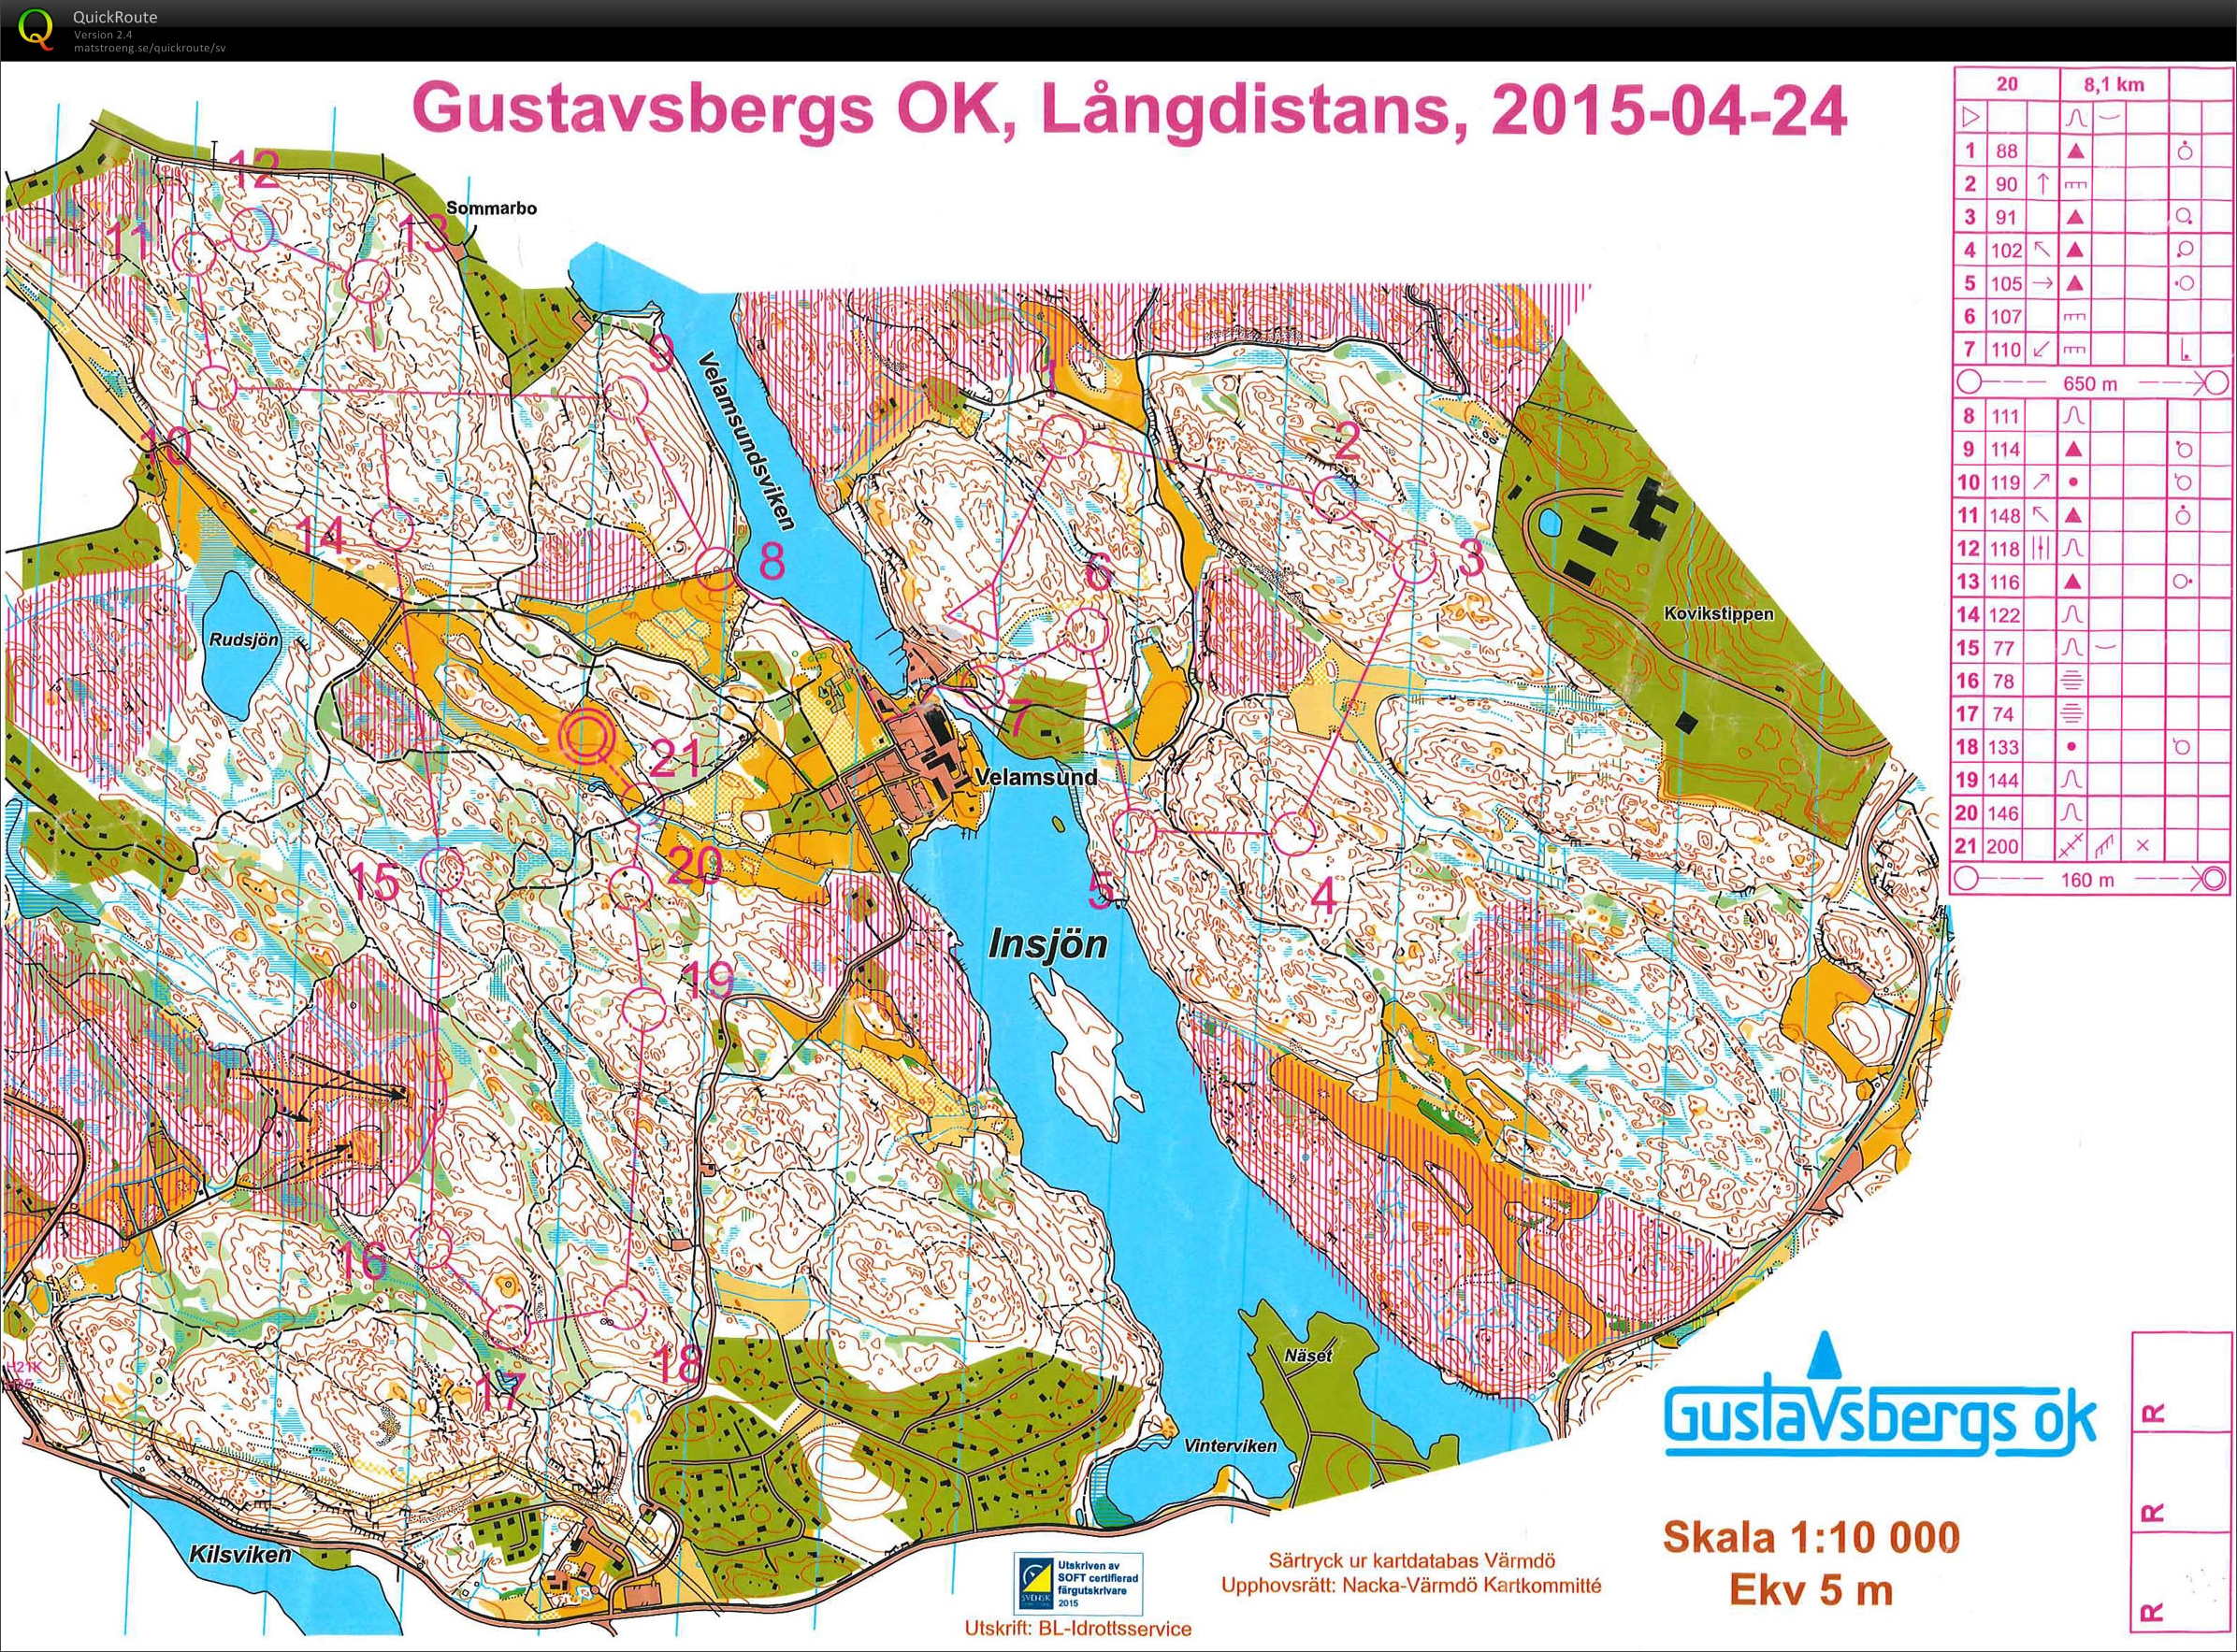 Gustavsbergs OK långdistans (25.04.2015)